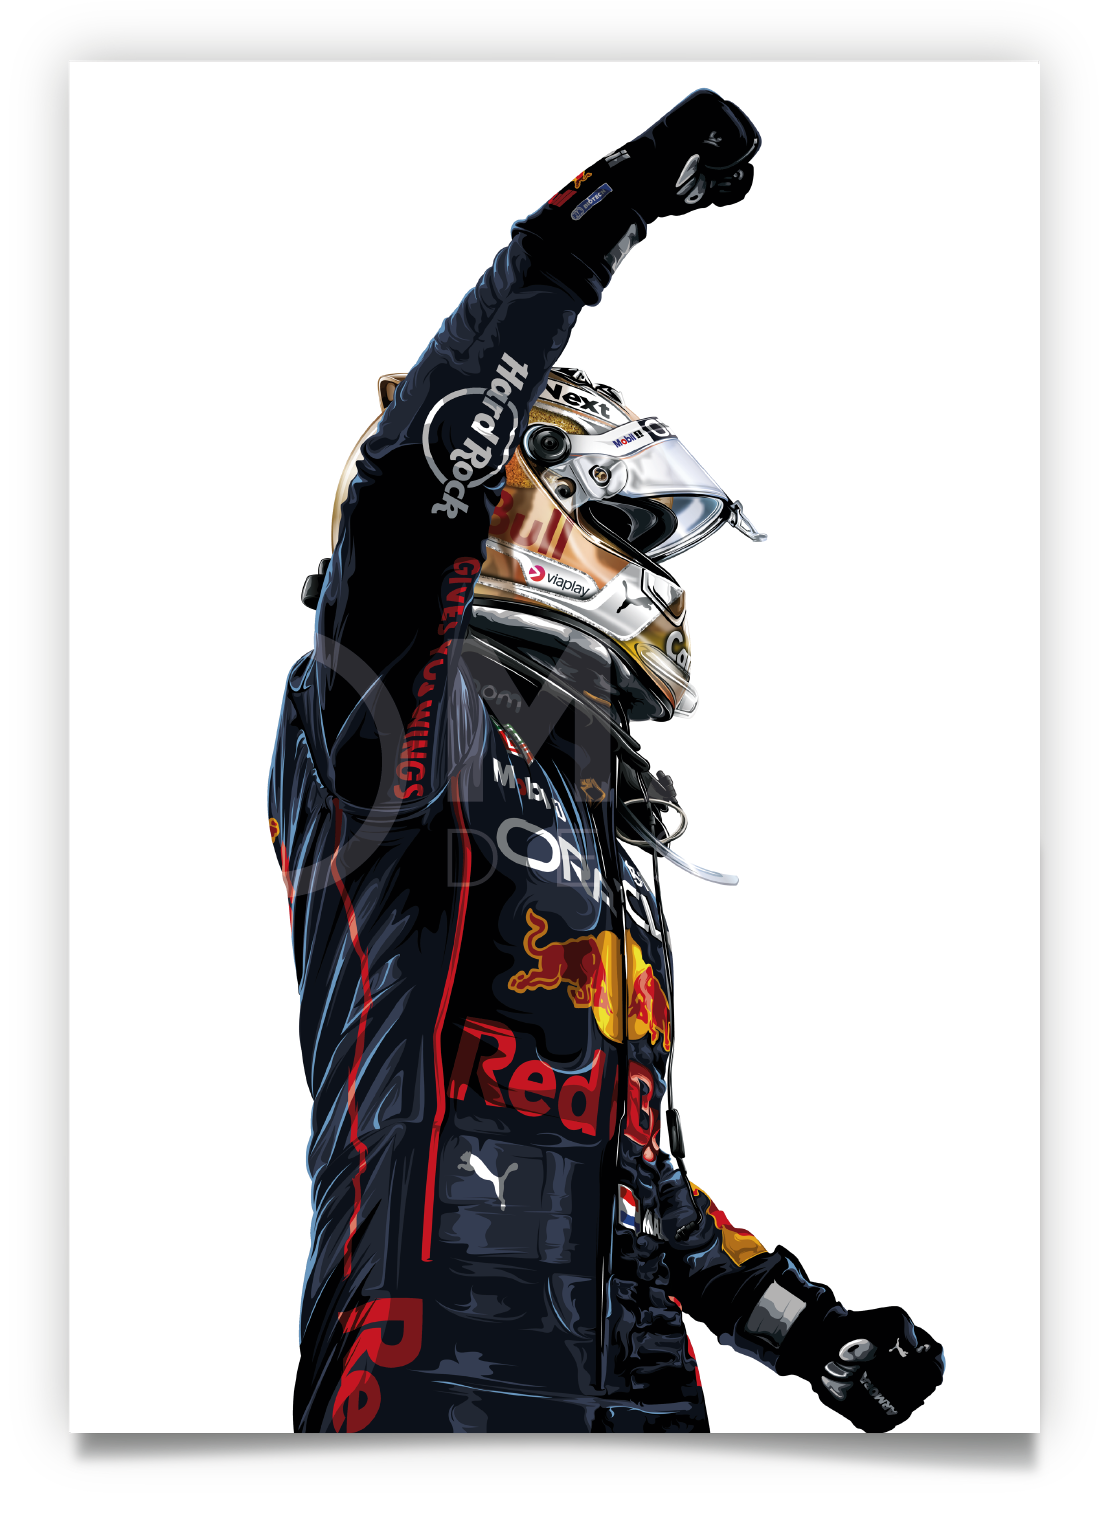 Max Verstappen World Championship Poster – OMAC Design